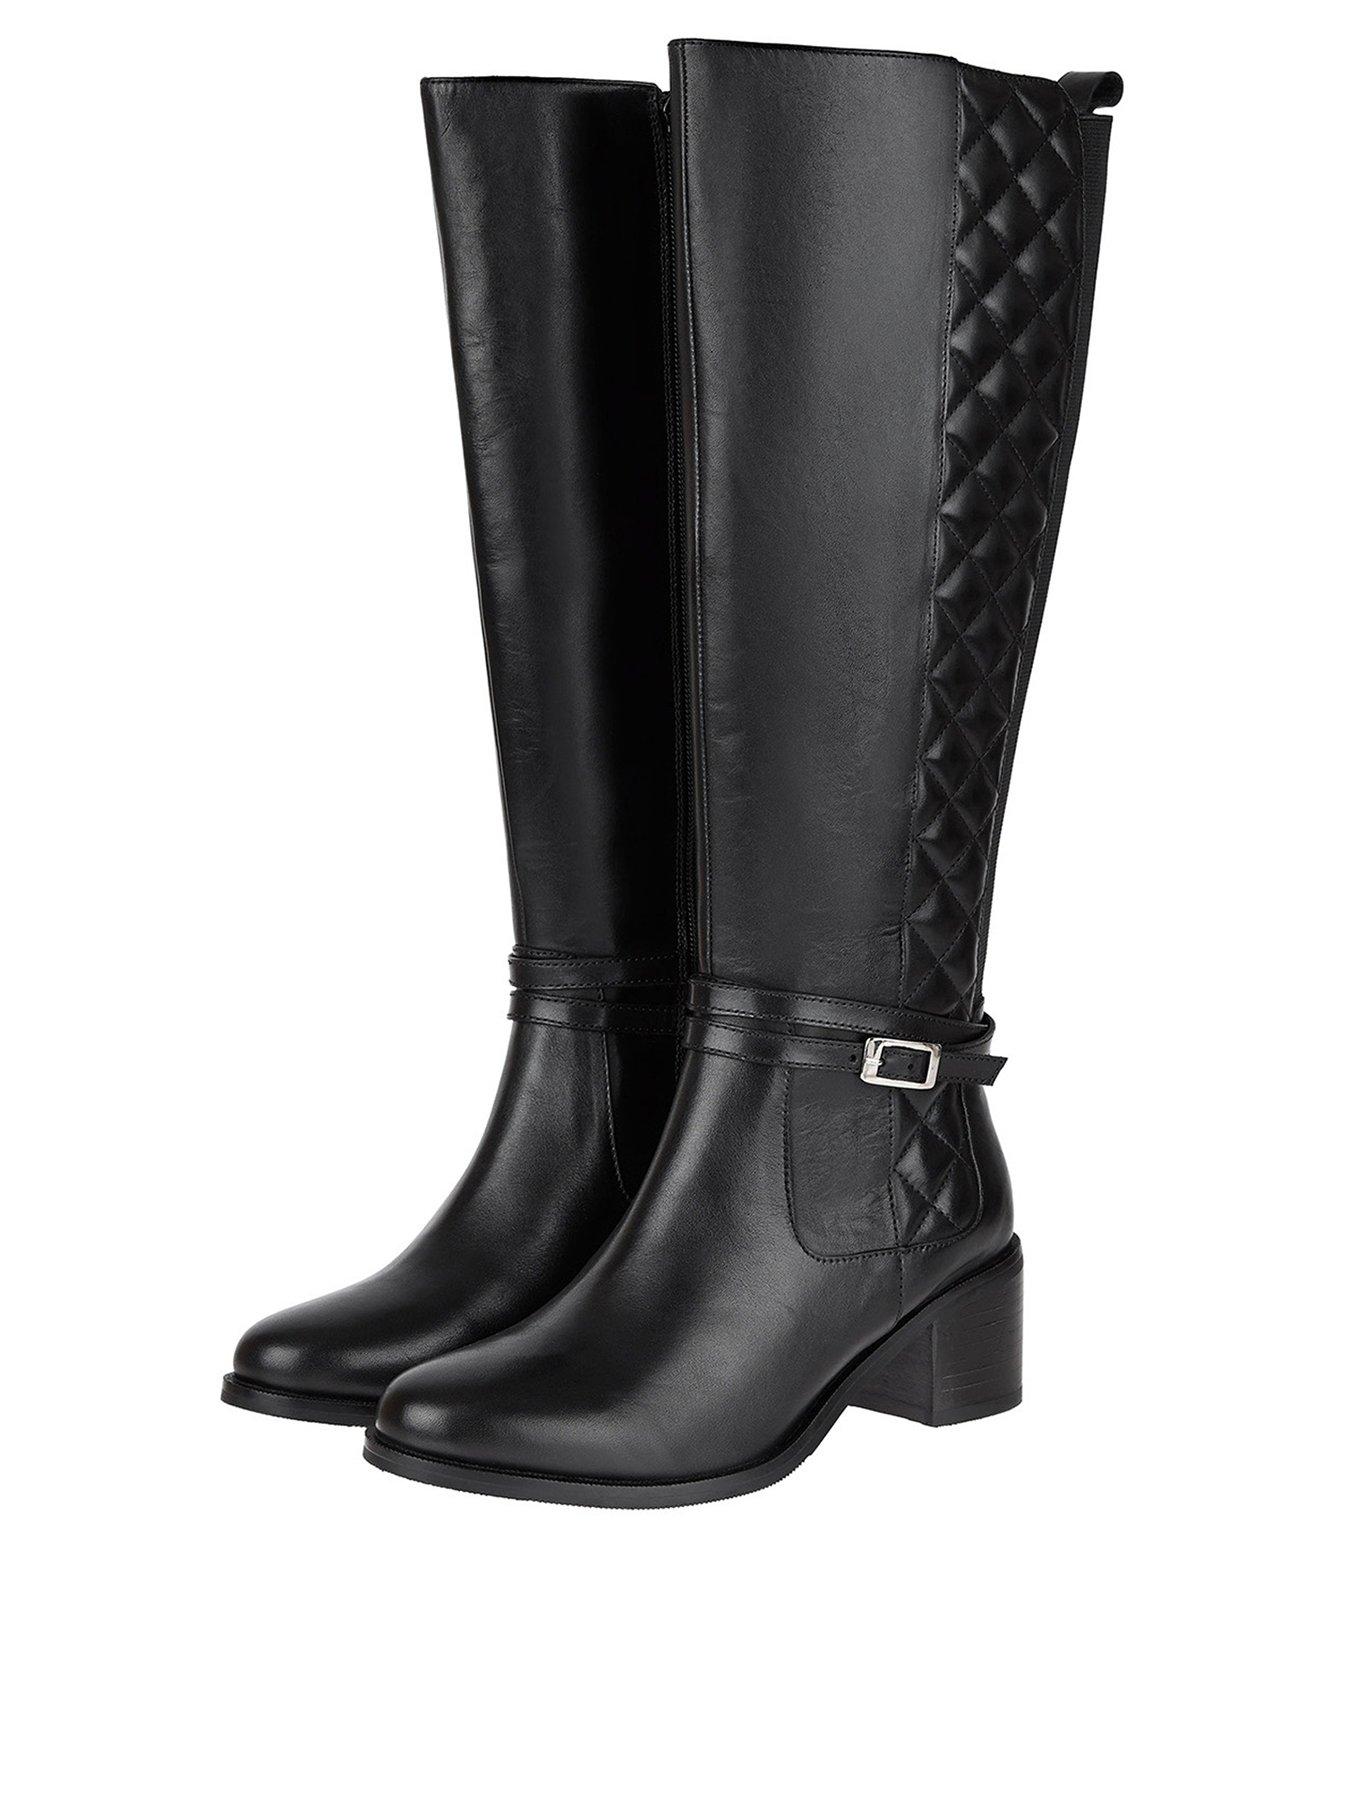 monsoon knee high boots